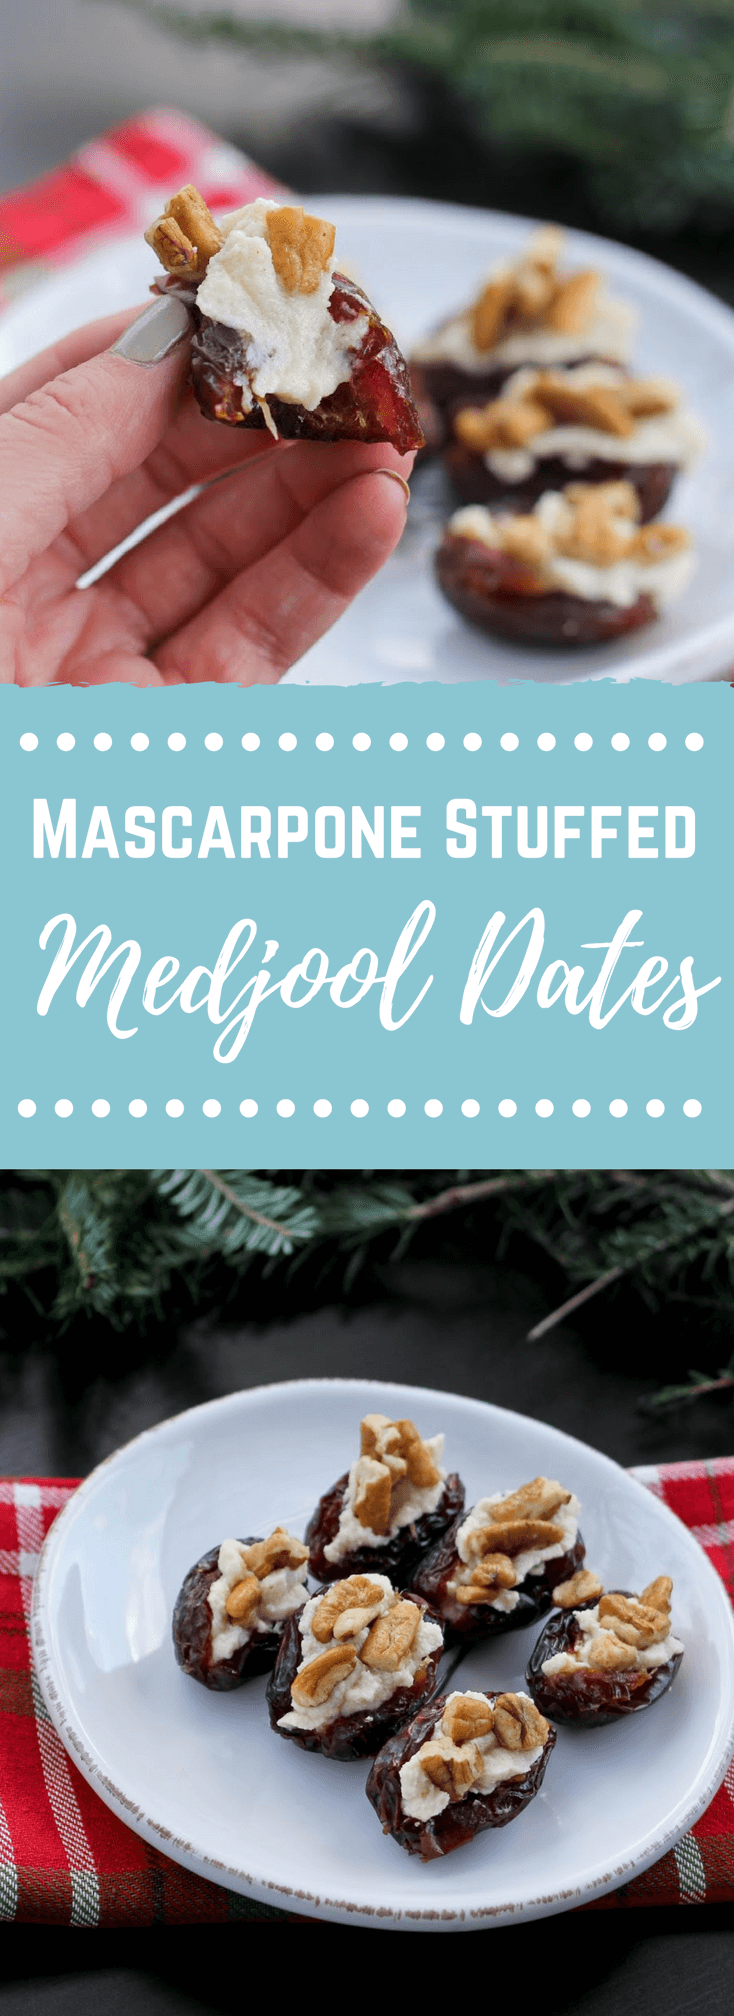 Mascarpone Stuffed Medjool Dates